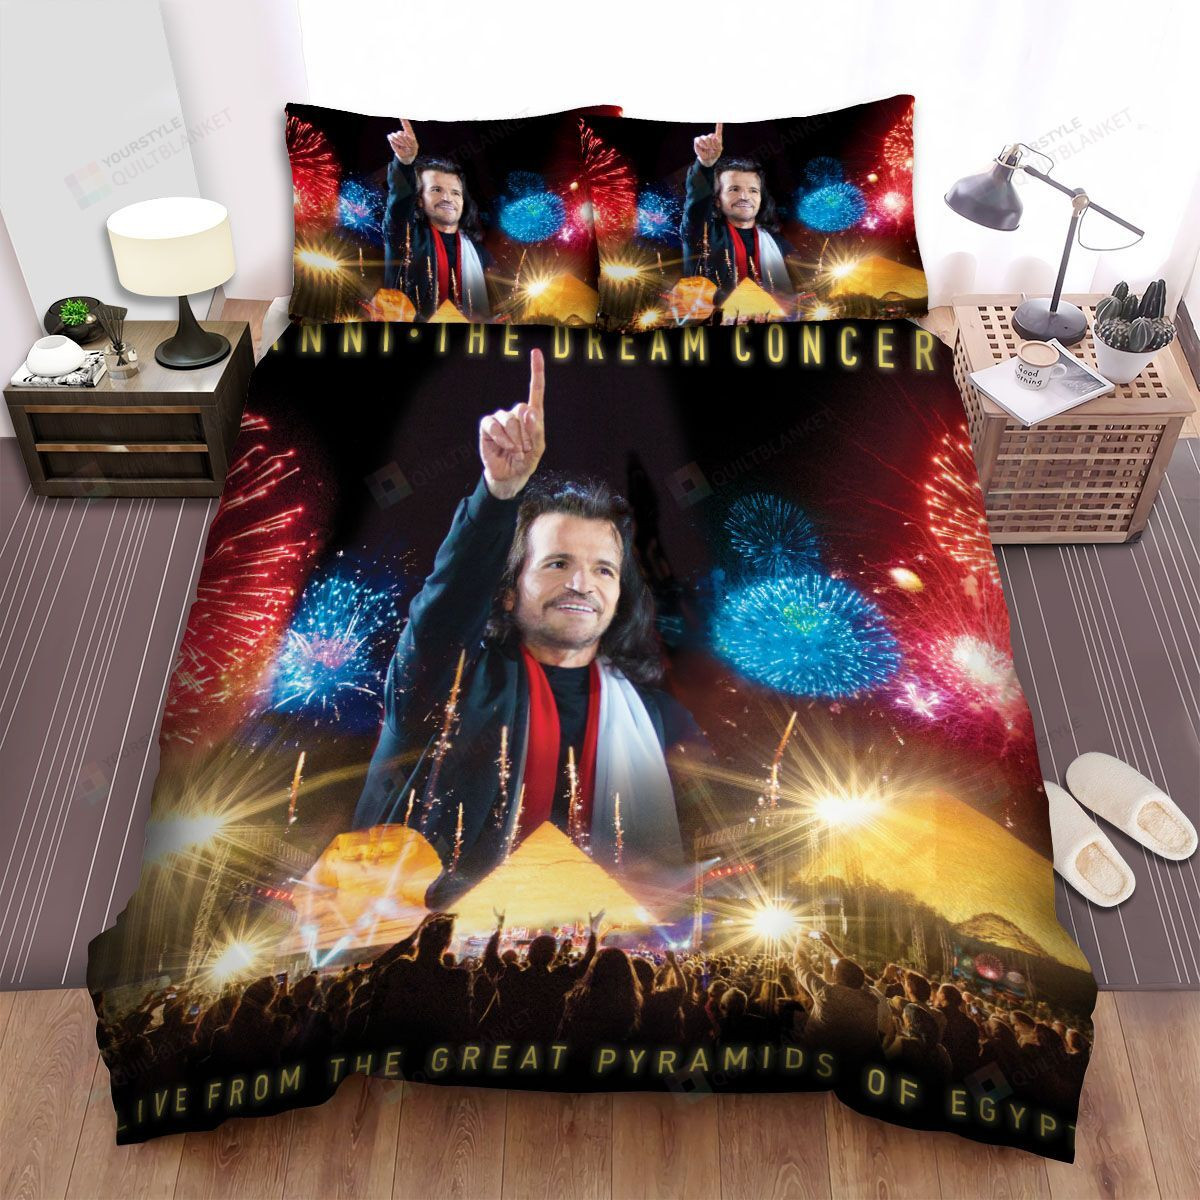 Yanni The Dream Concert Album Cover Bed Sheets Spread Comforter Duvet Cover Bedding Sets